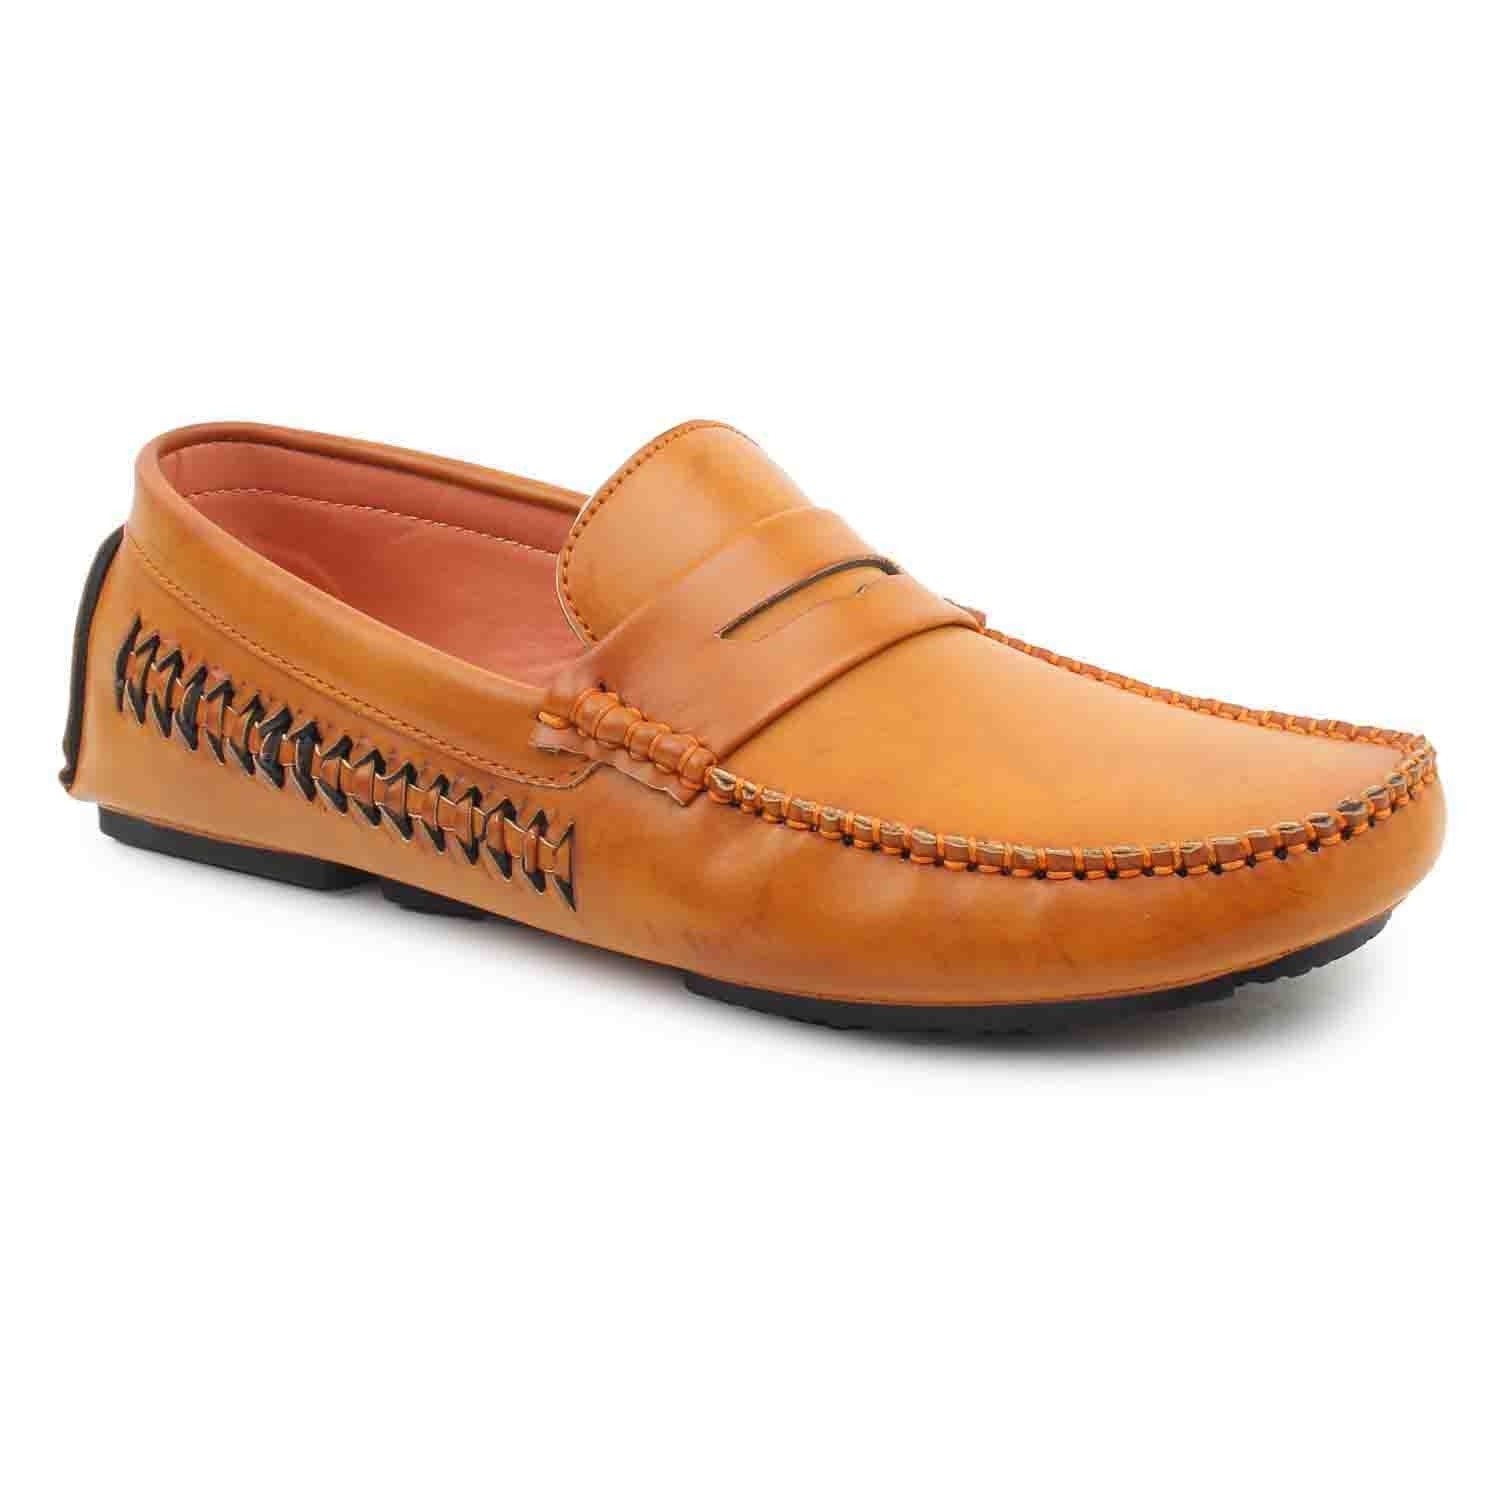 Leatherite Shoes Tan